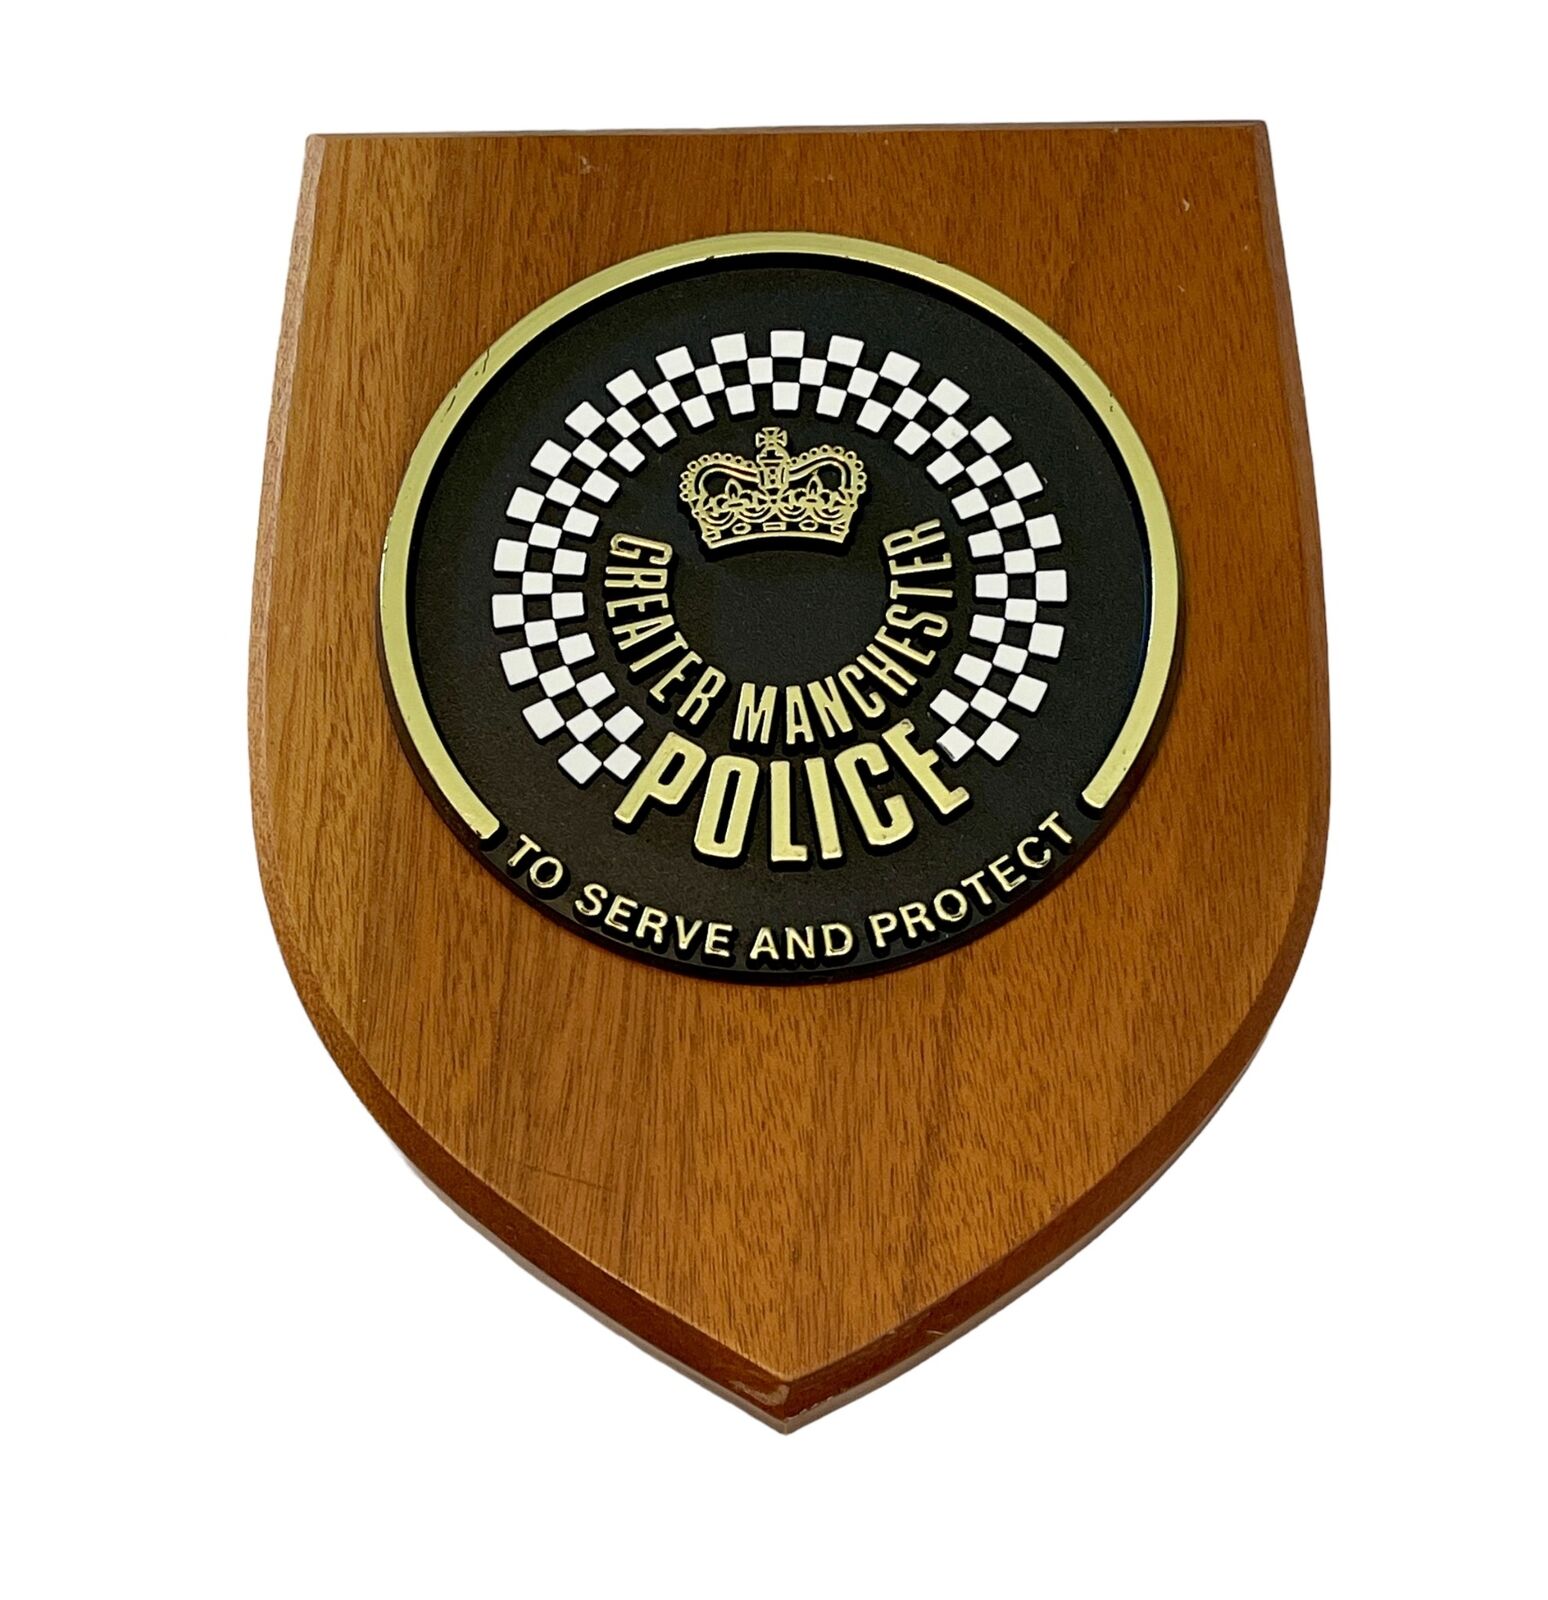 Greater Manchester Police Crest Badge Wood Plaque UK England United Kingdom